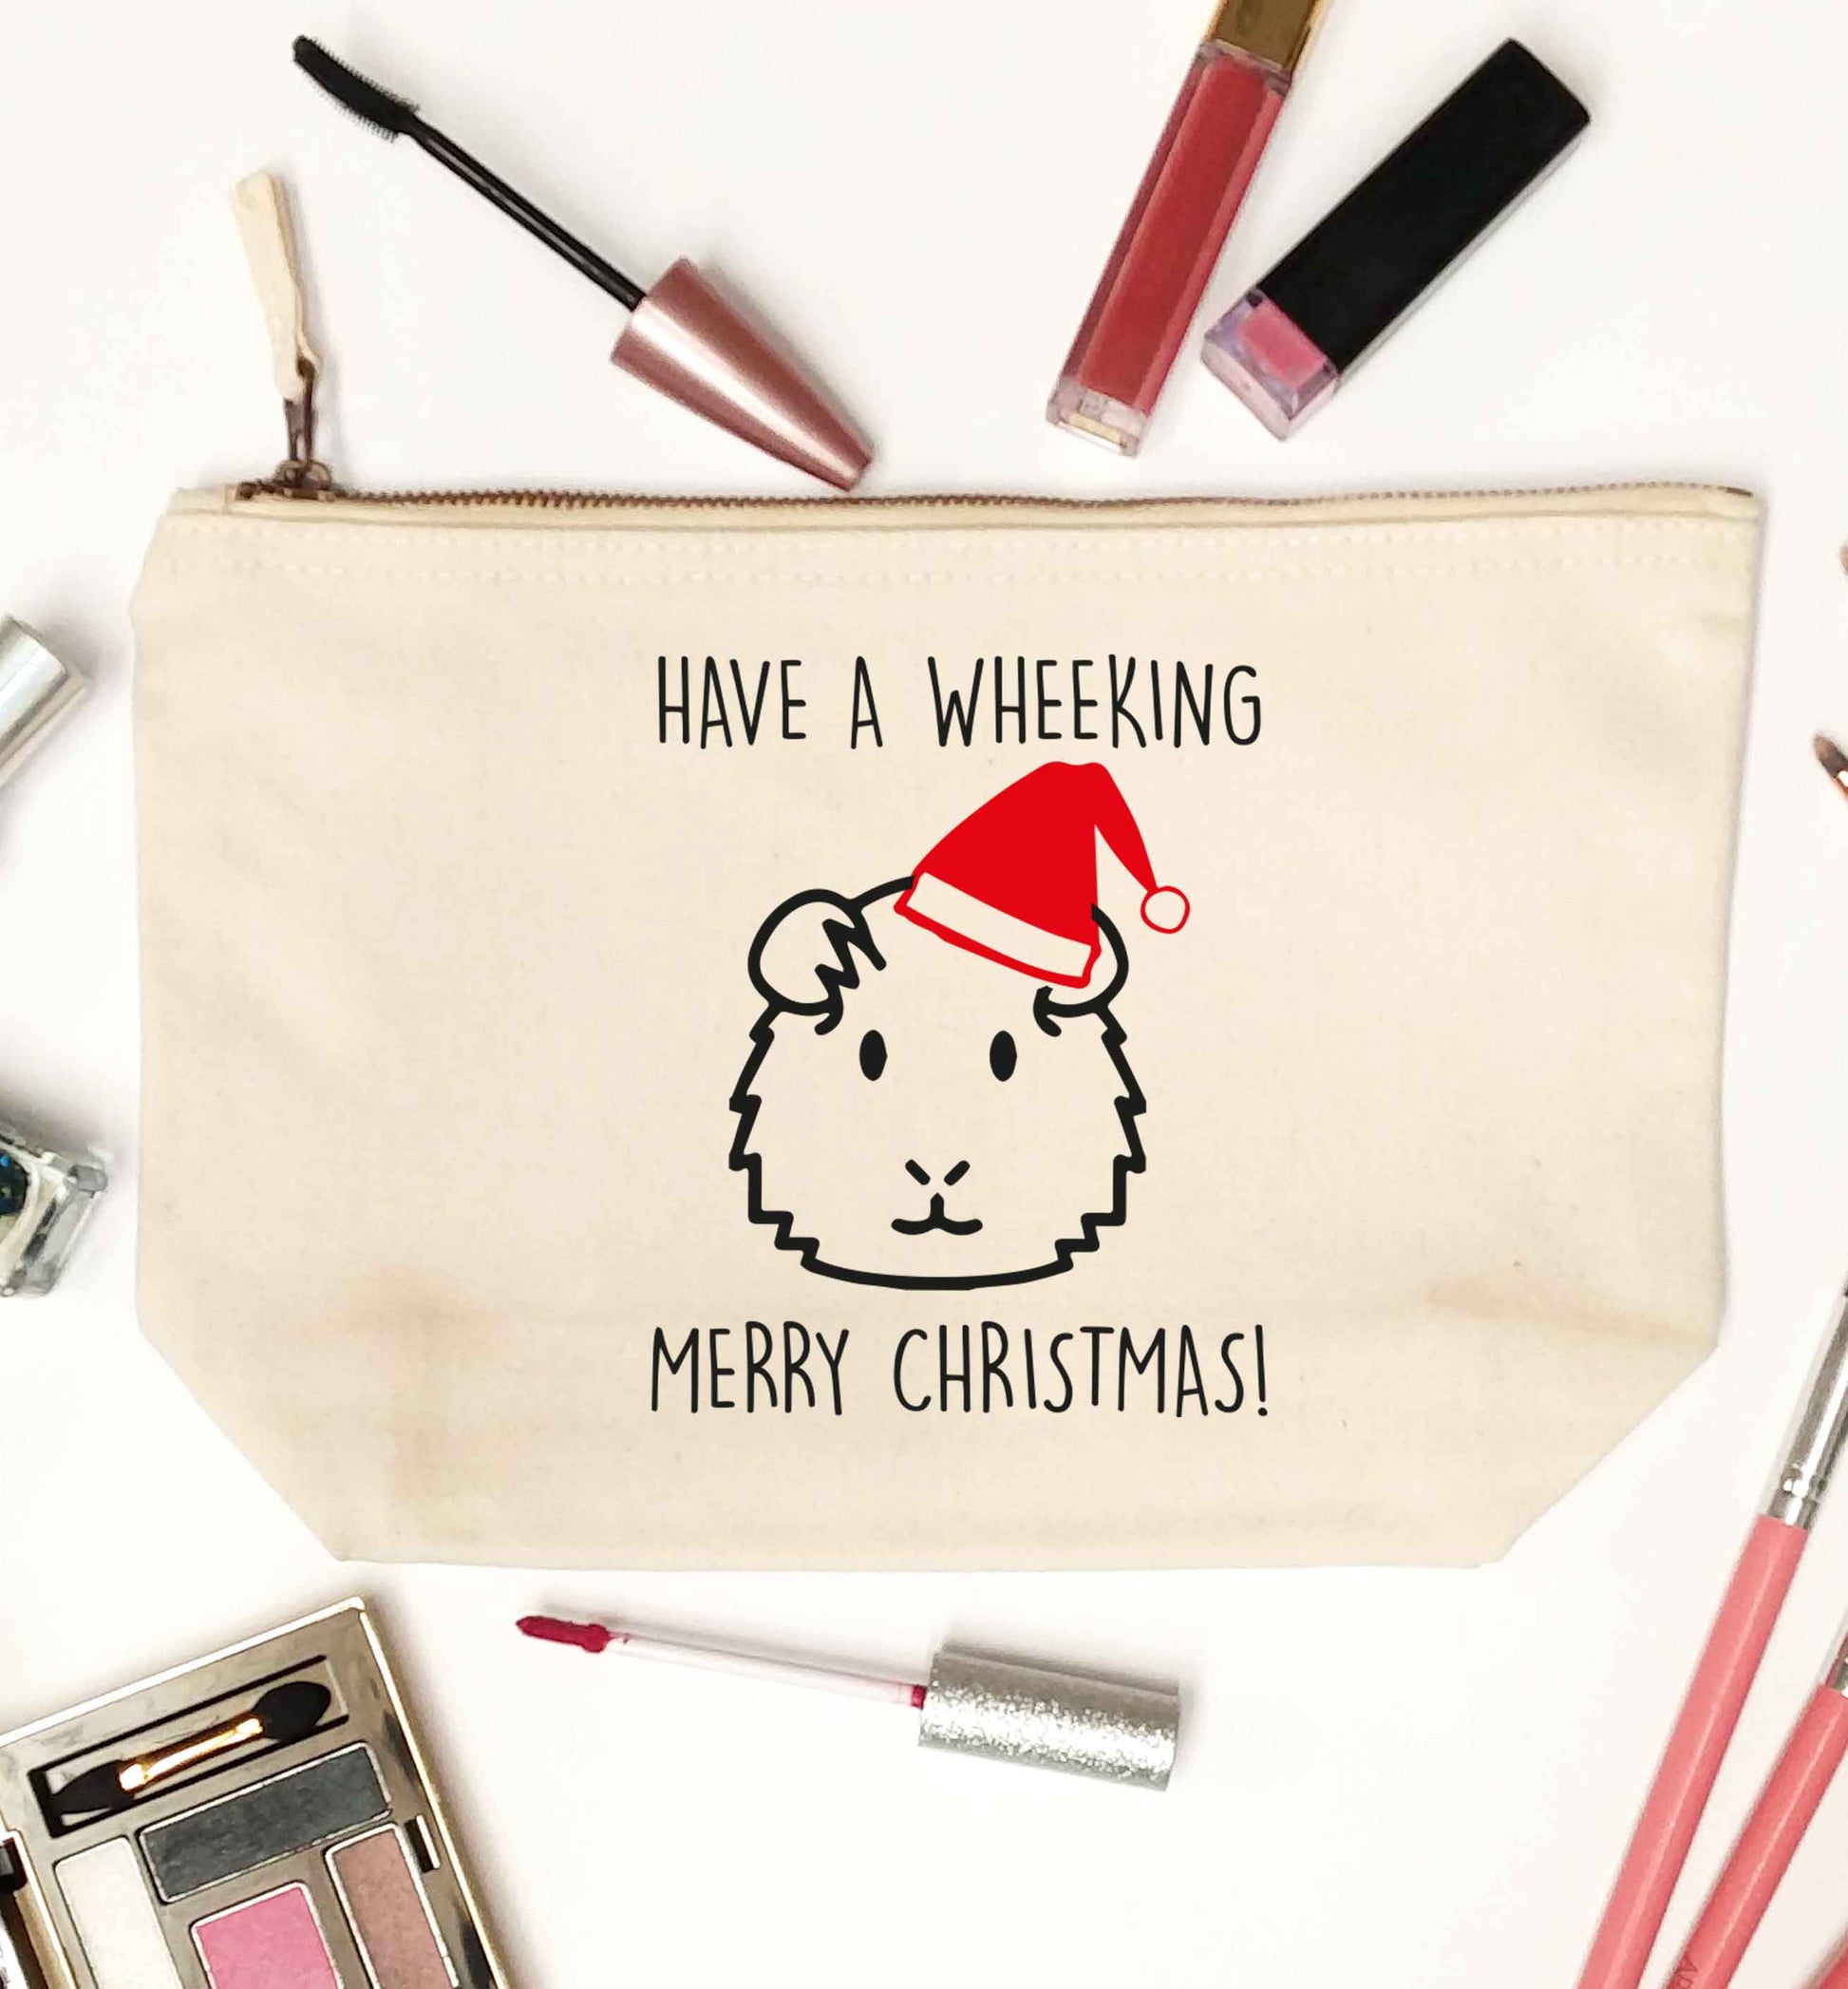 Have a wheeking merry Christmas natural makeup bag